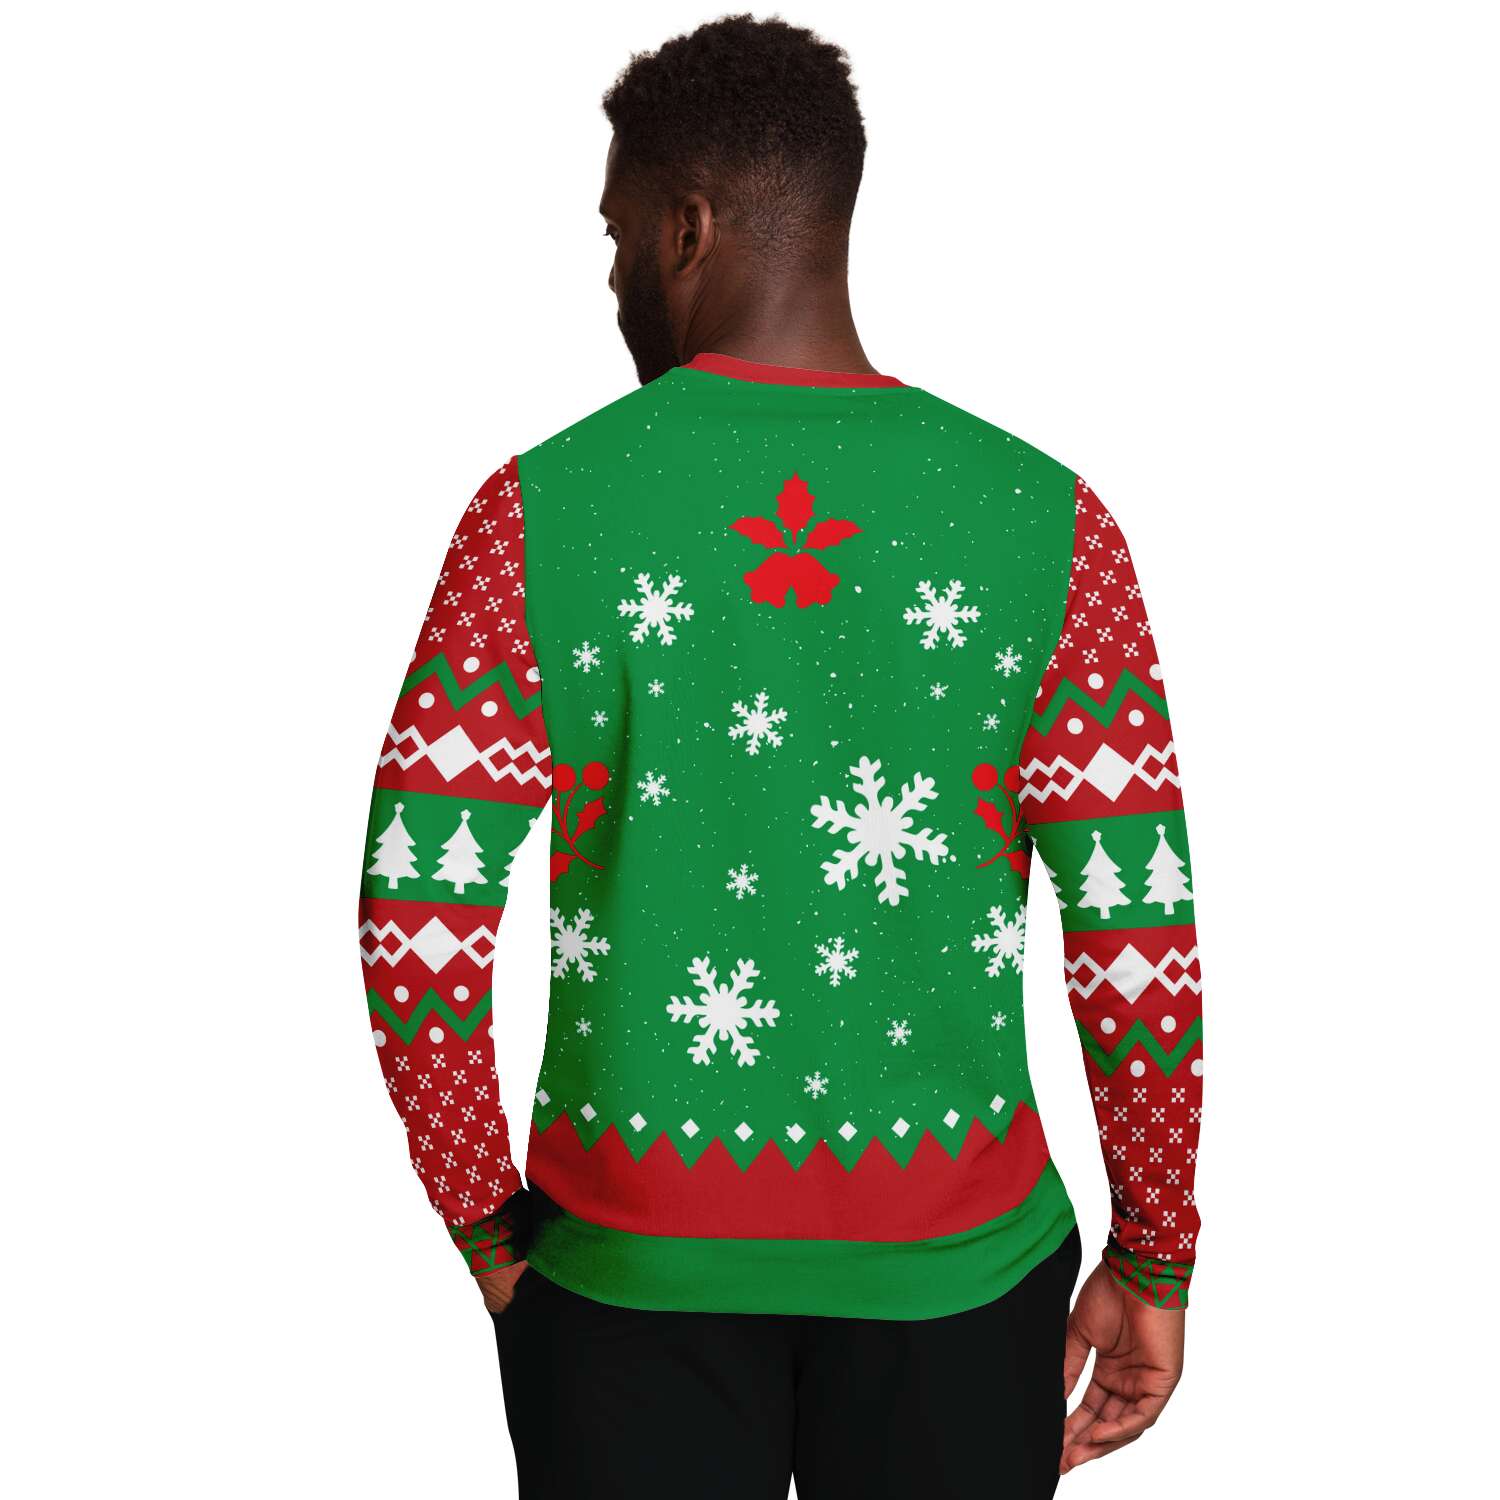 Sweet But Twisted Sweatshirt | Unisex Ugly Christmas Sweater, Xmas Sweater, Holiday Sweater, Festive Sweater, Funny Sweater, Funny Party Shirt